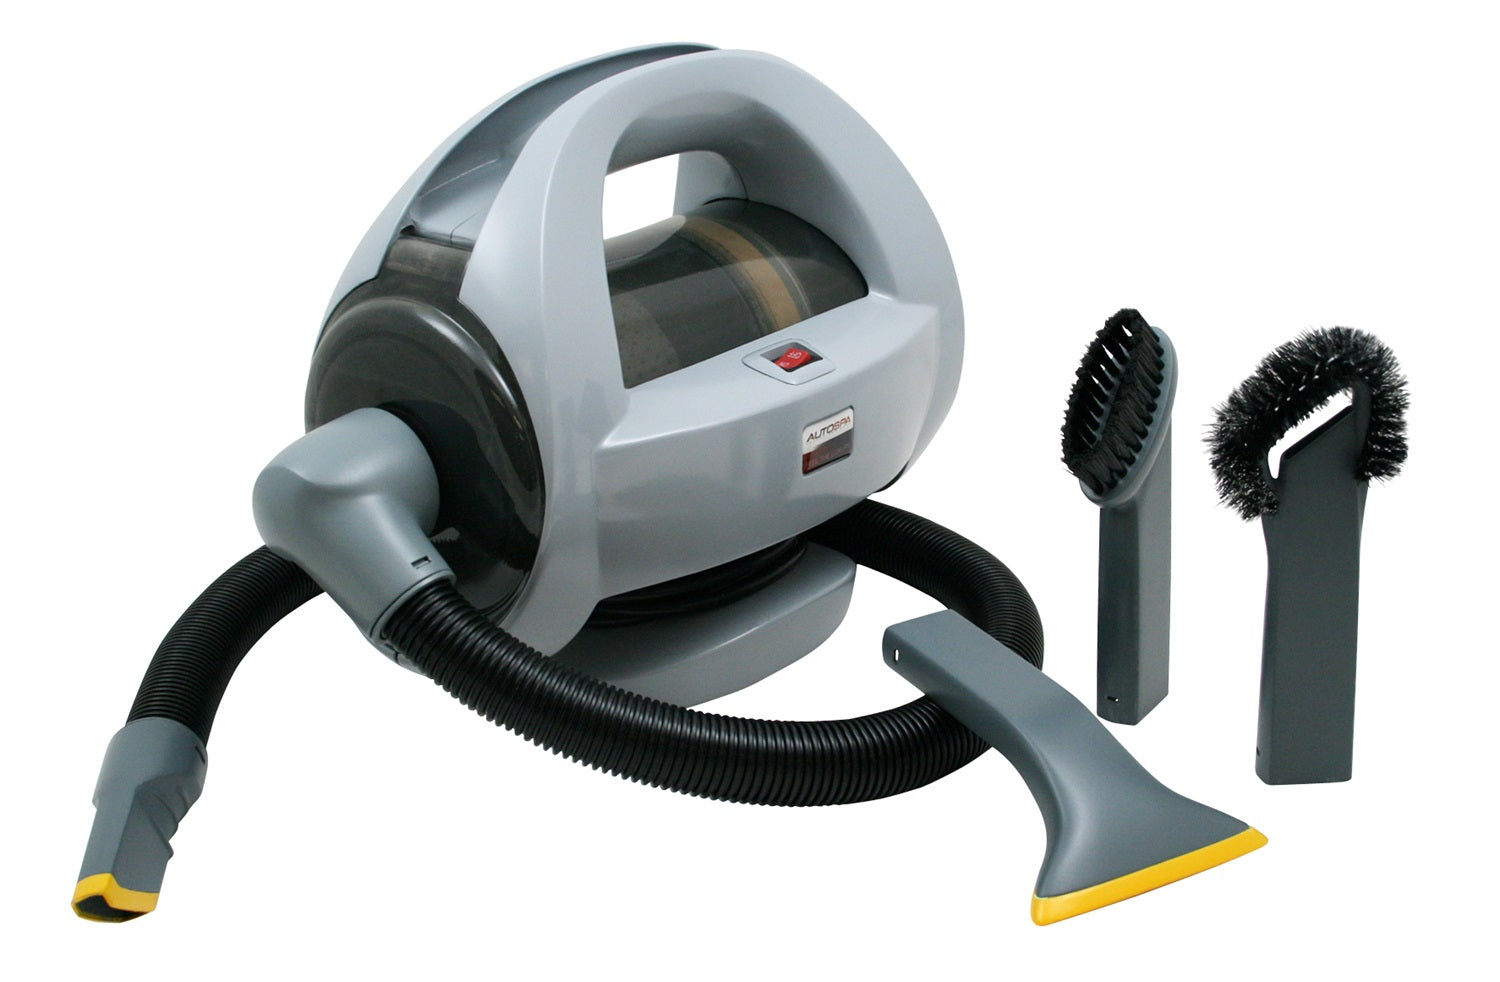 Carrand 94005AS Auto-Vac Bagless Vacuum